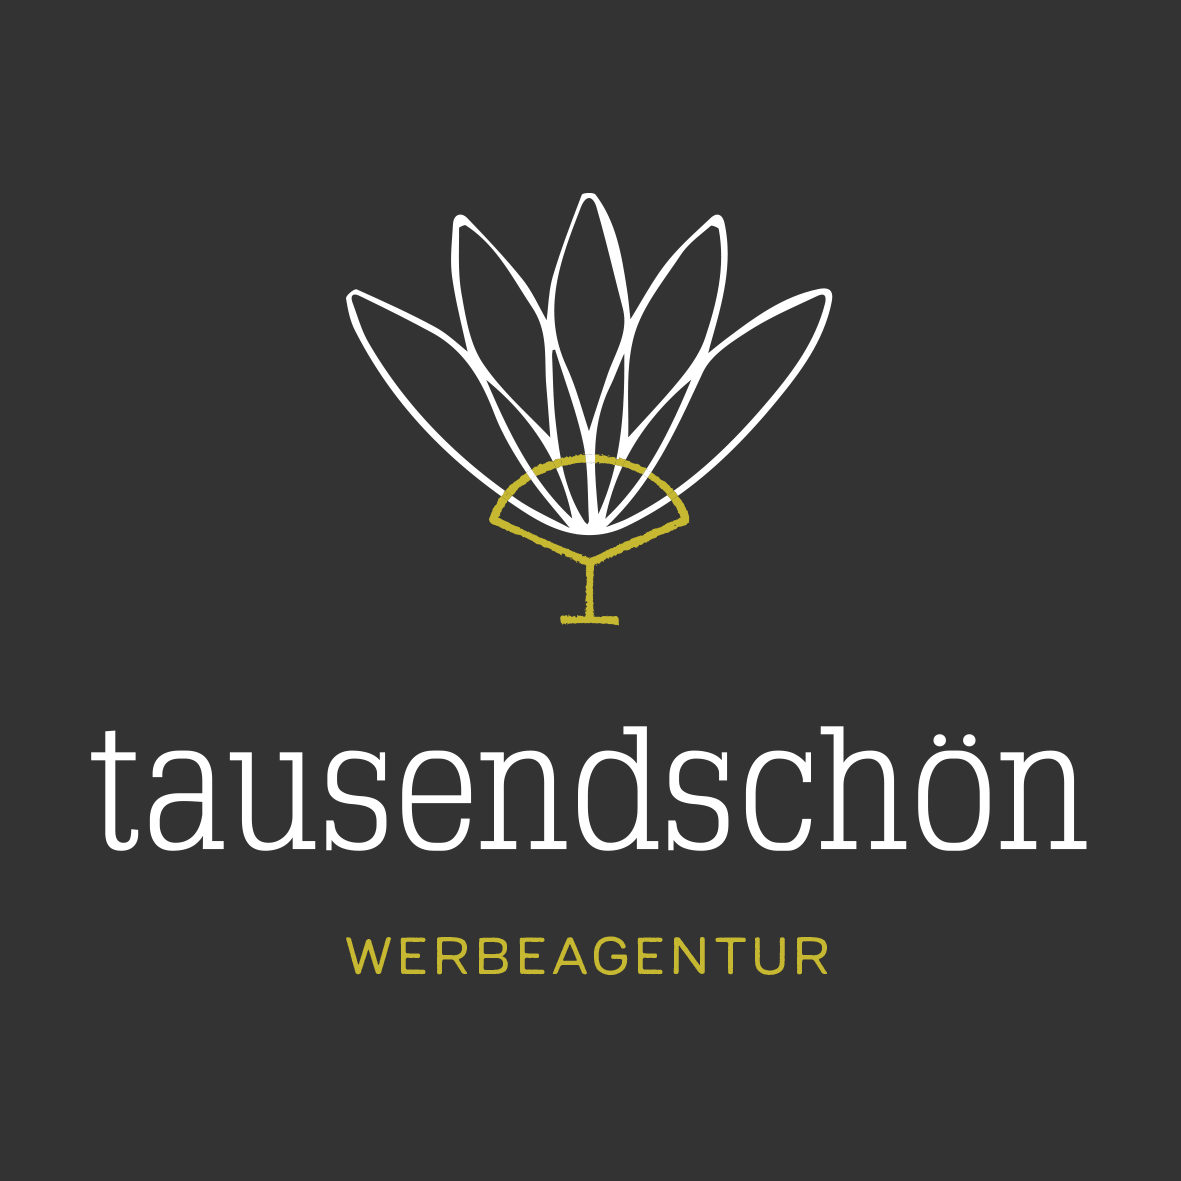 (c) Tausendschoendesign.com